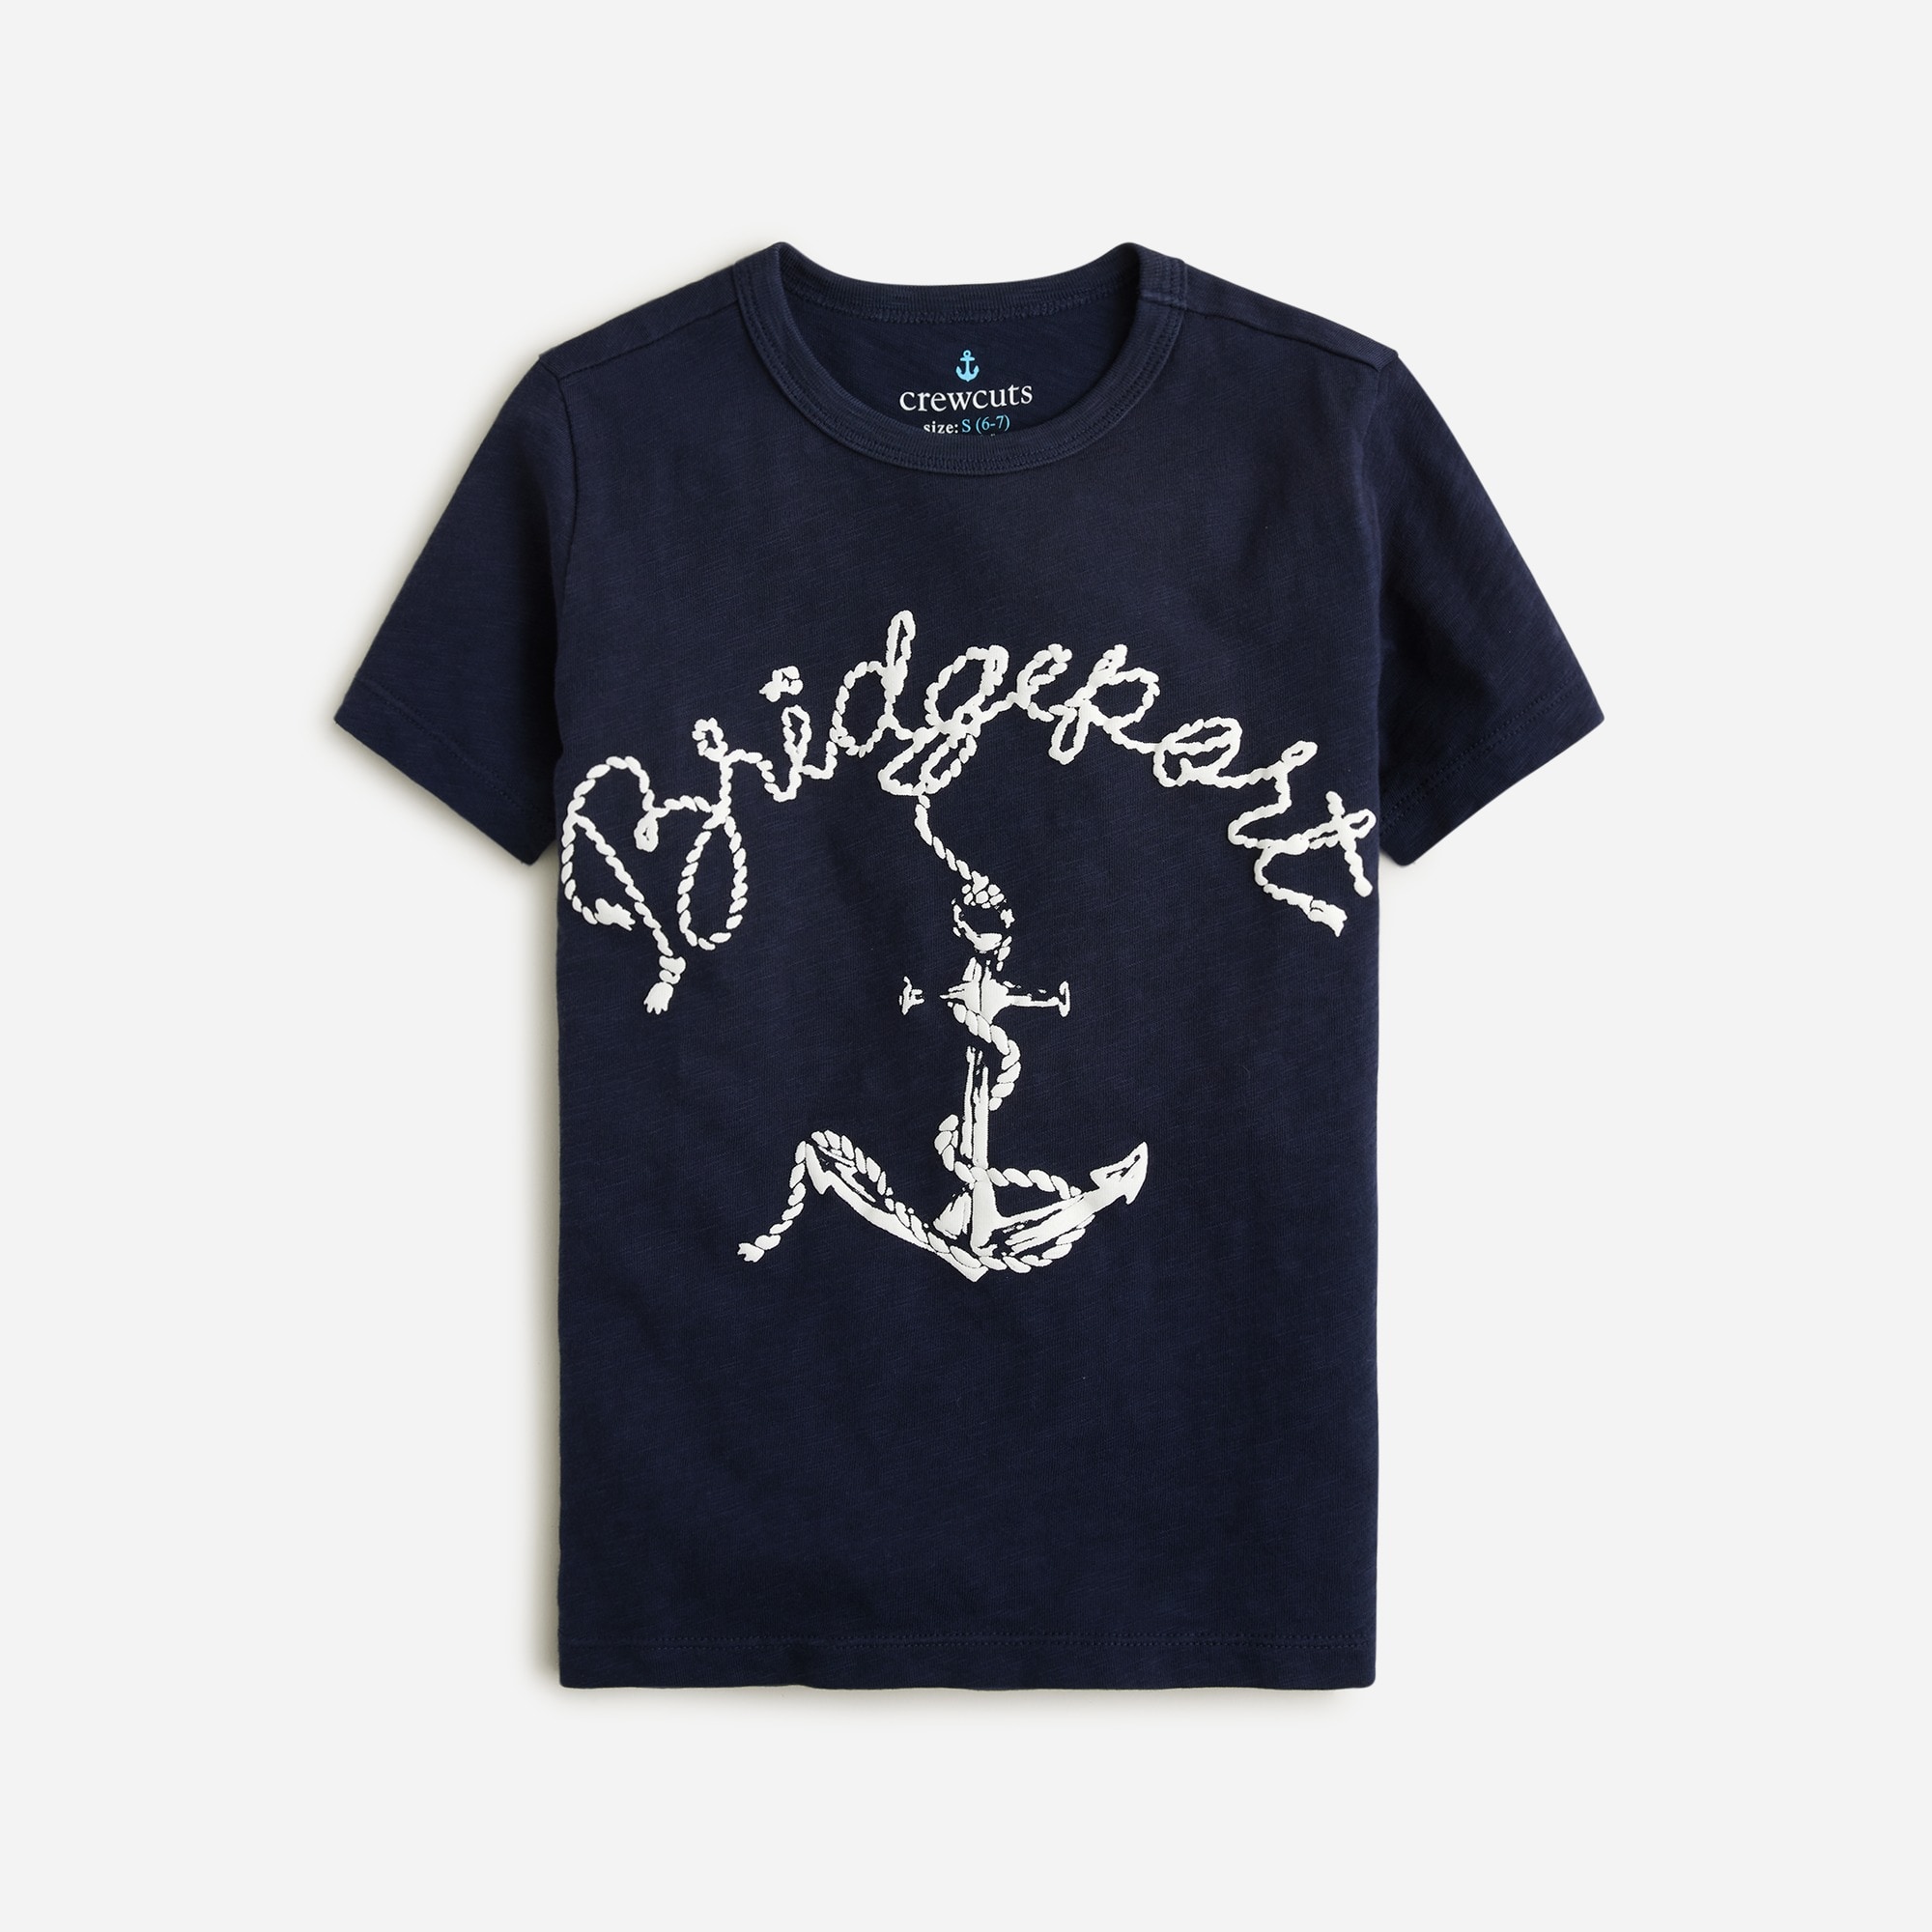  Kids' short-sleeve Bridgeport graphic T-shirt